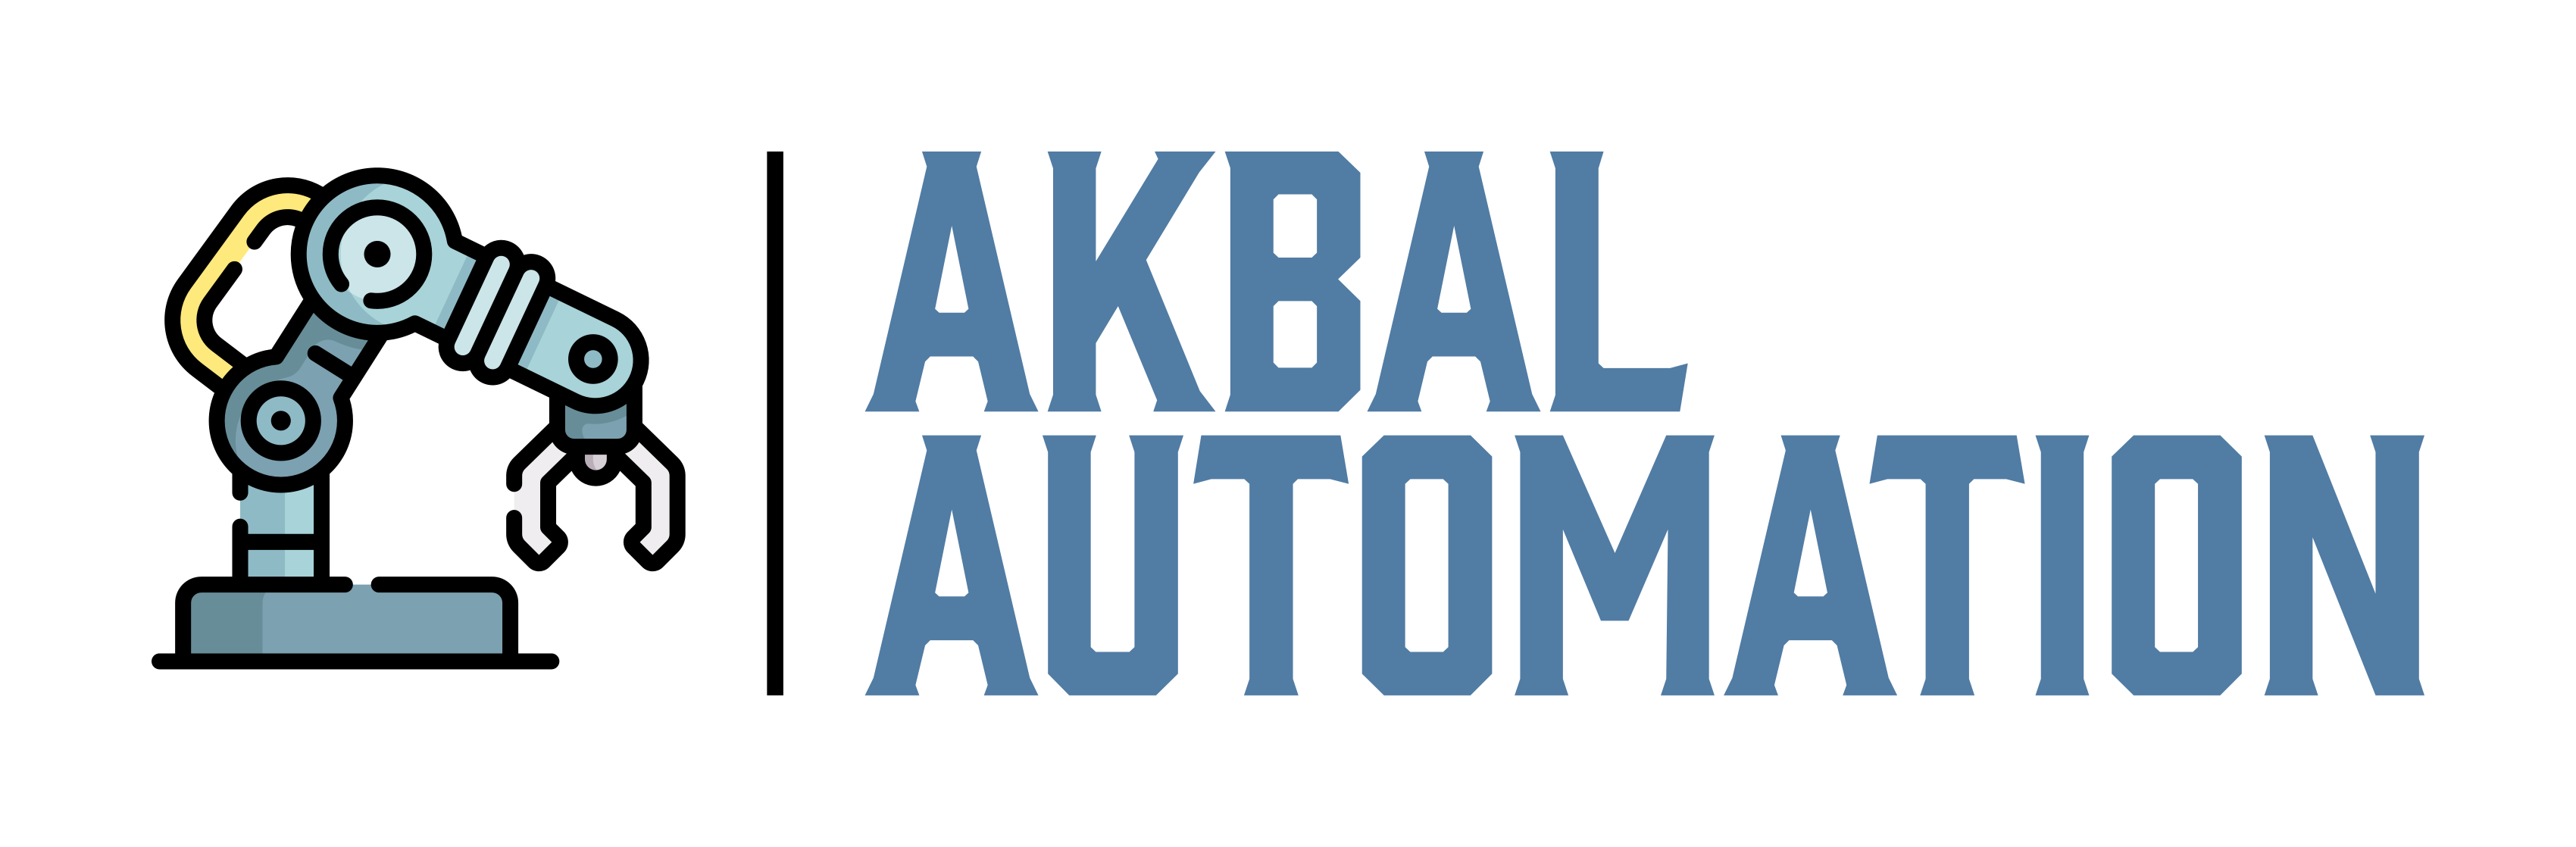 Akbal Automation